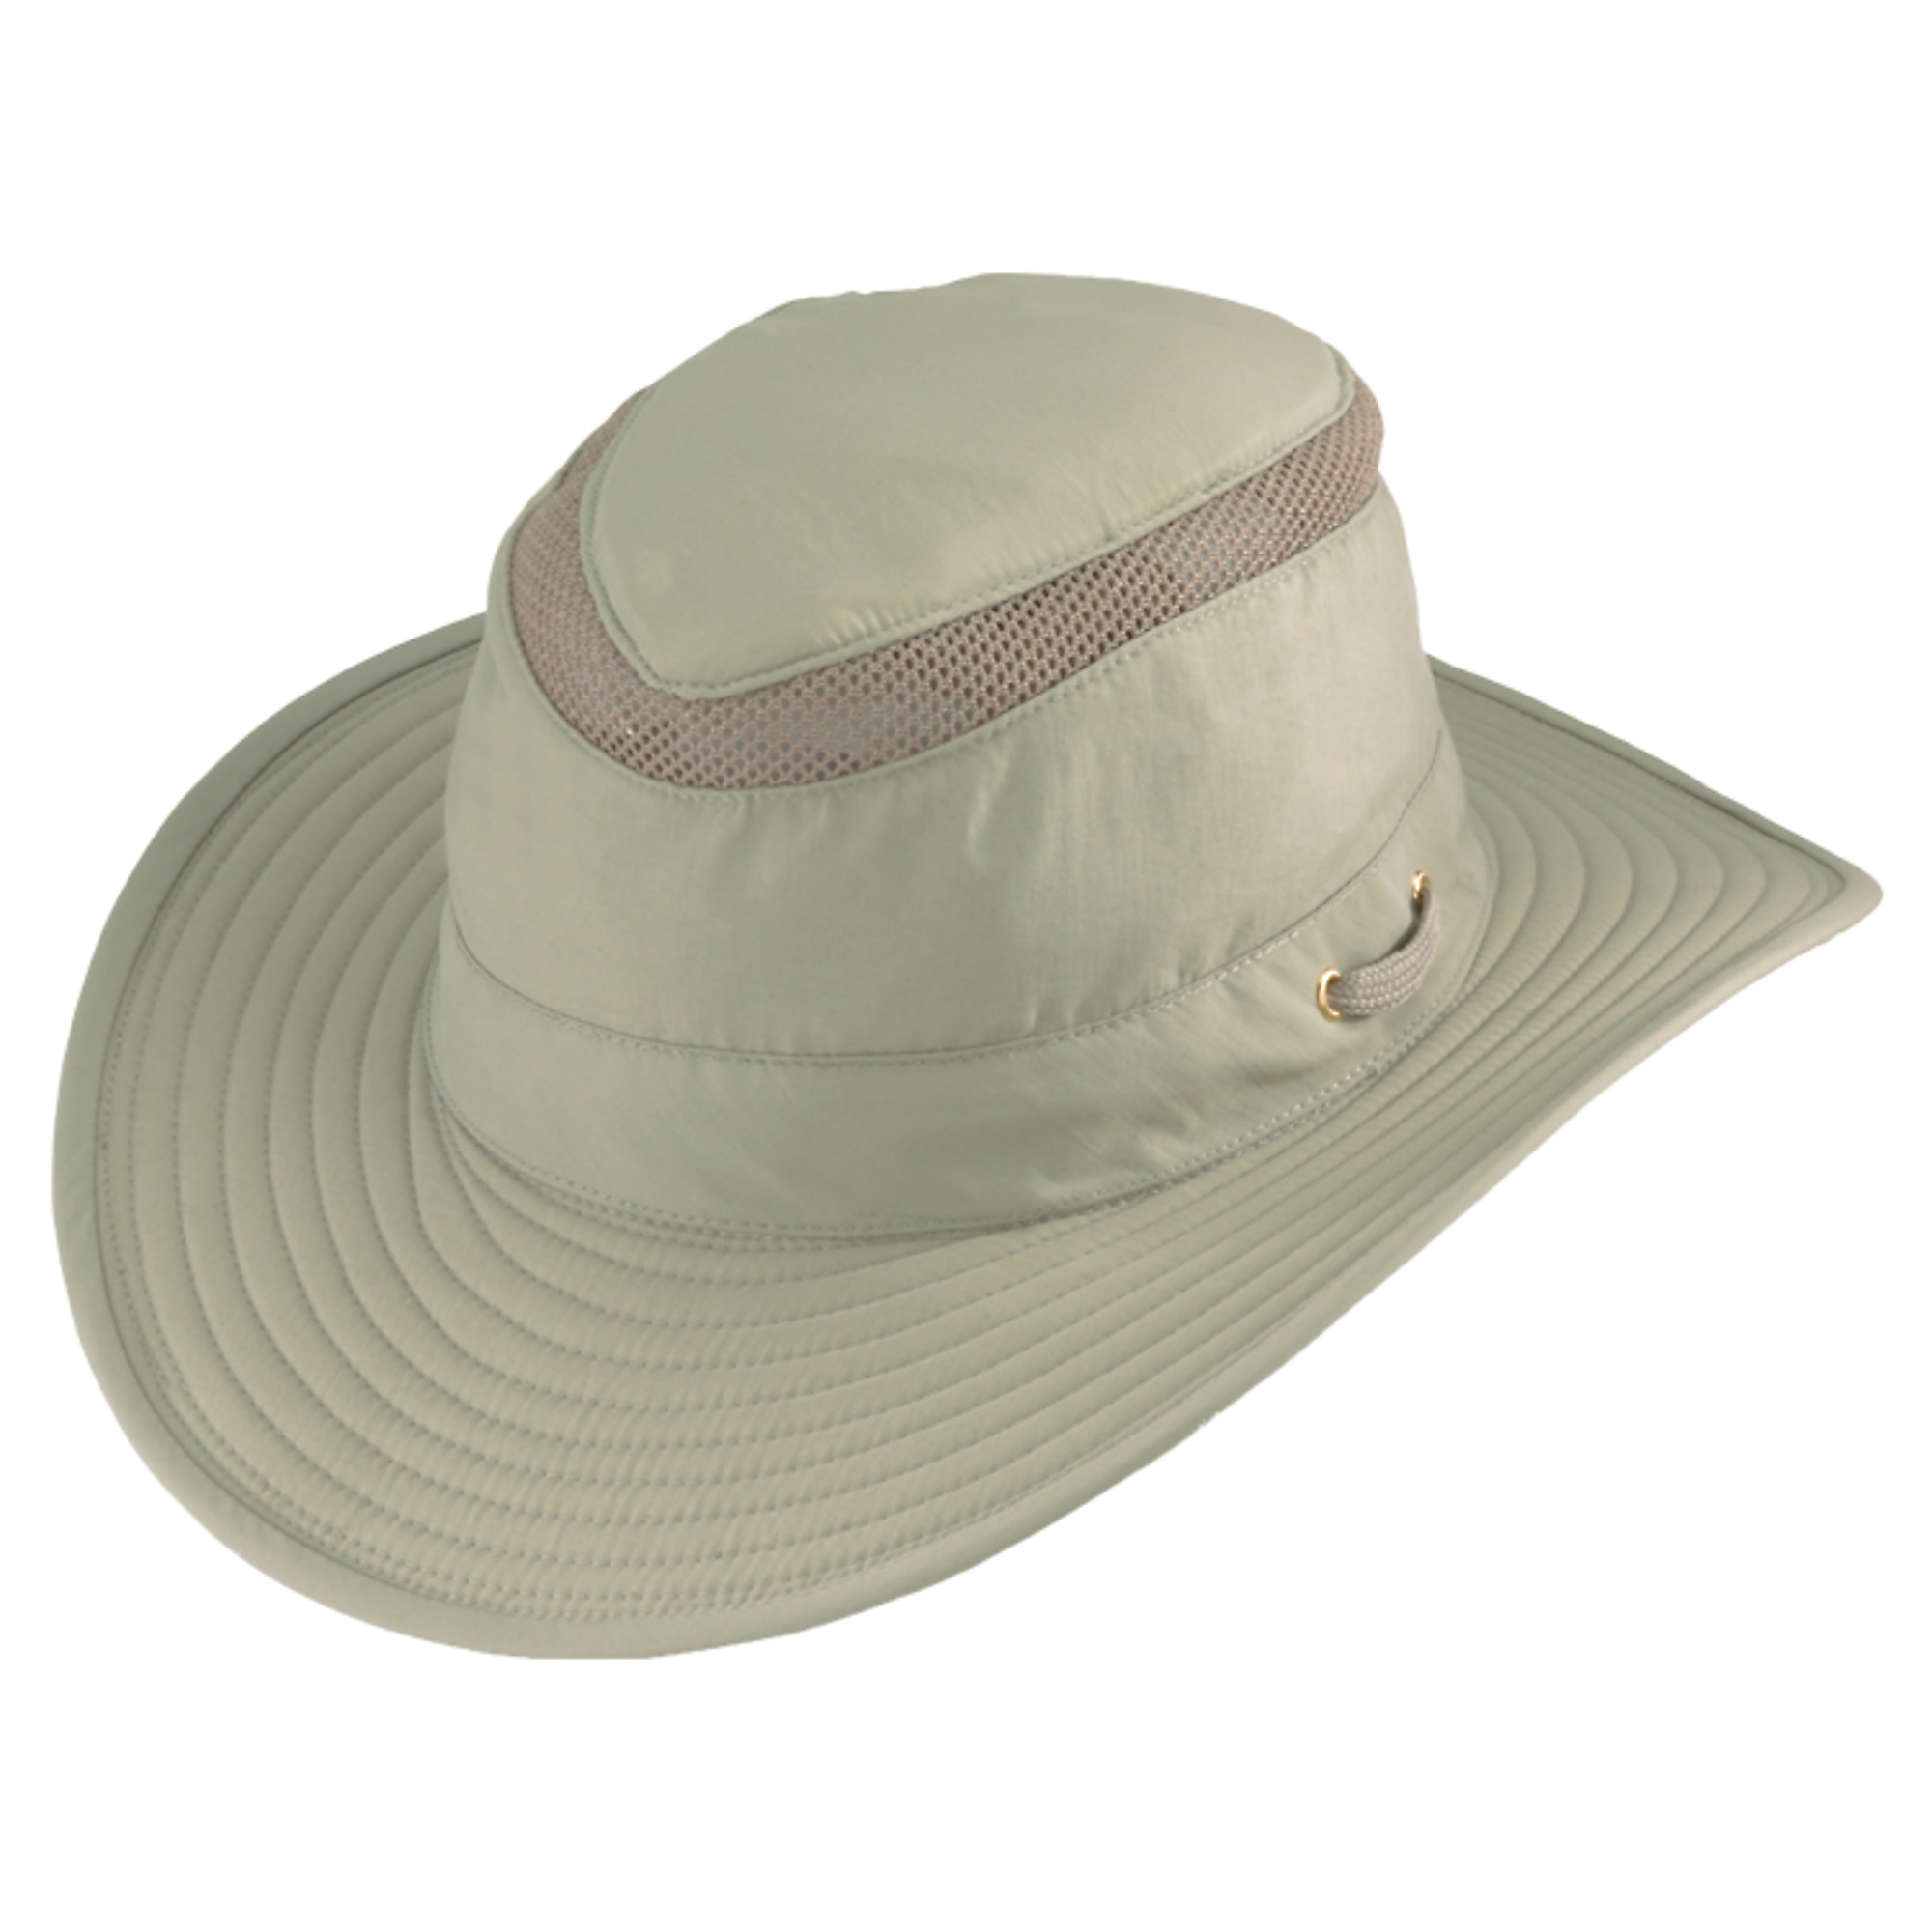 Henschel Hat Company, Camper Booney Hat, UPF 50+, Size M, Color Tan, Hat Style Hat, Model 5552-13-M